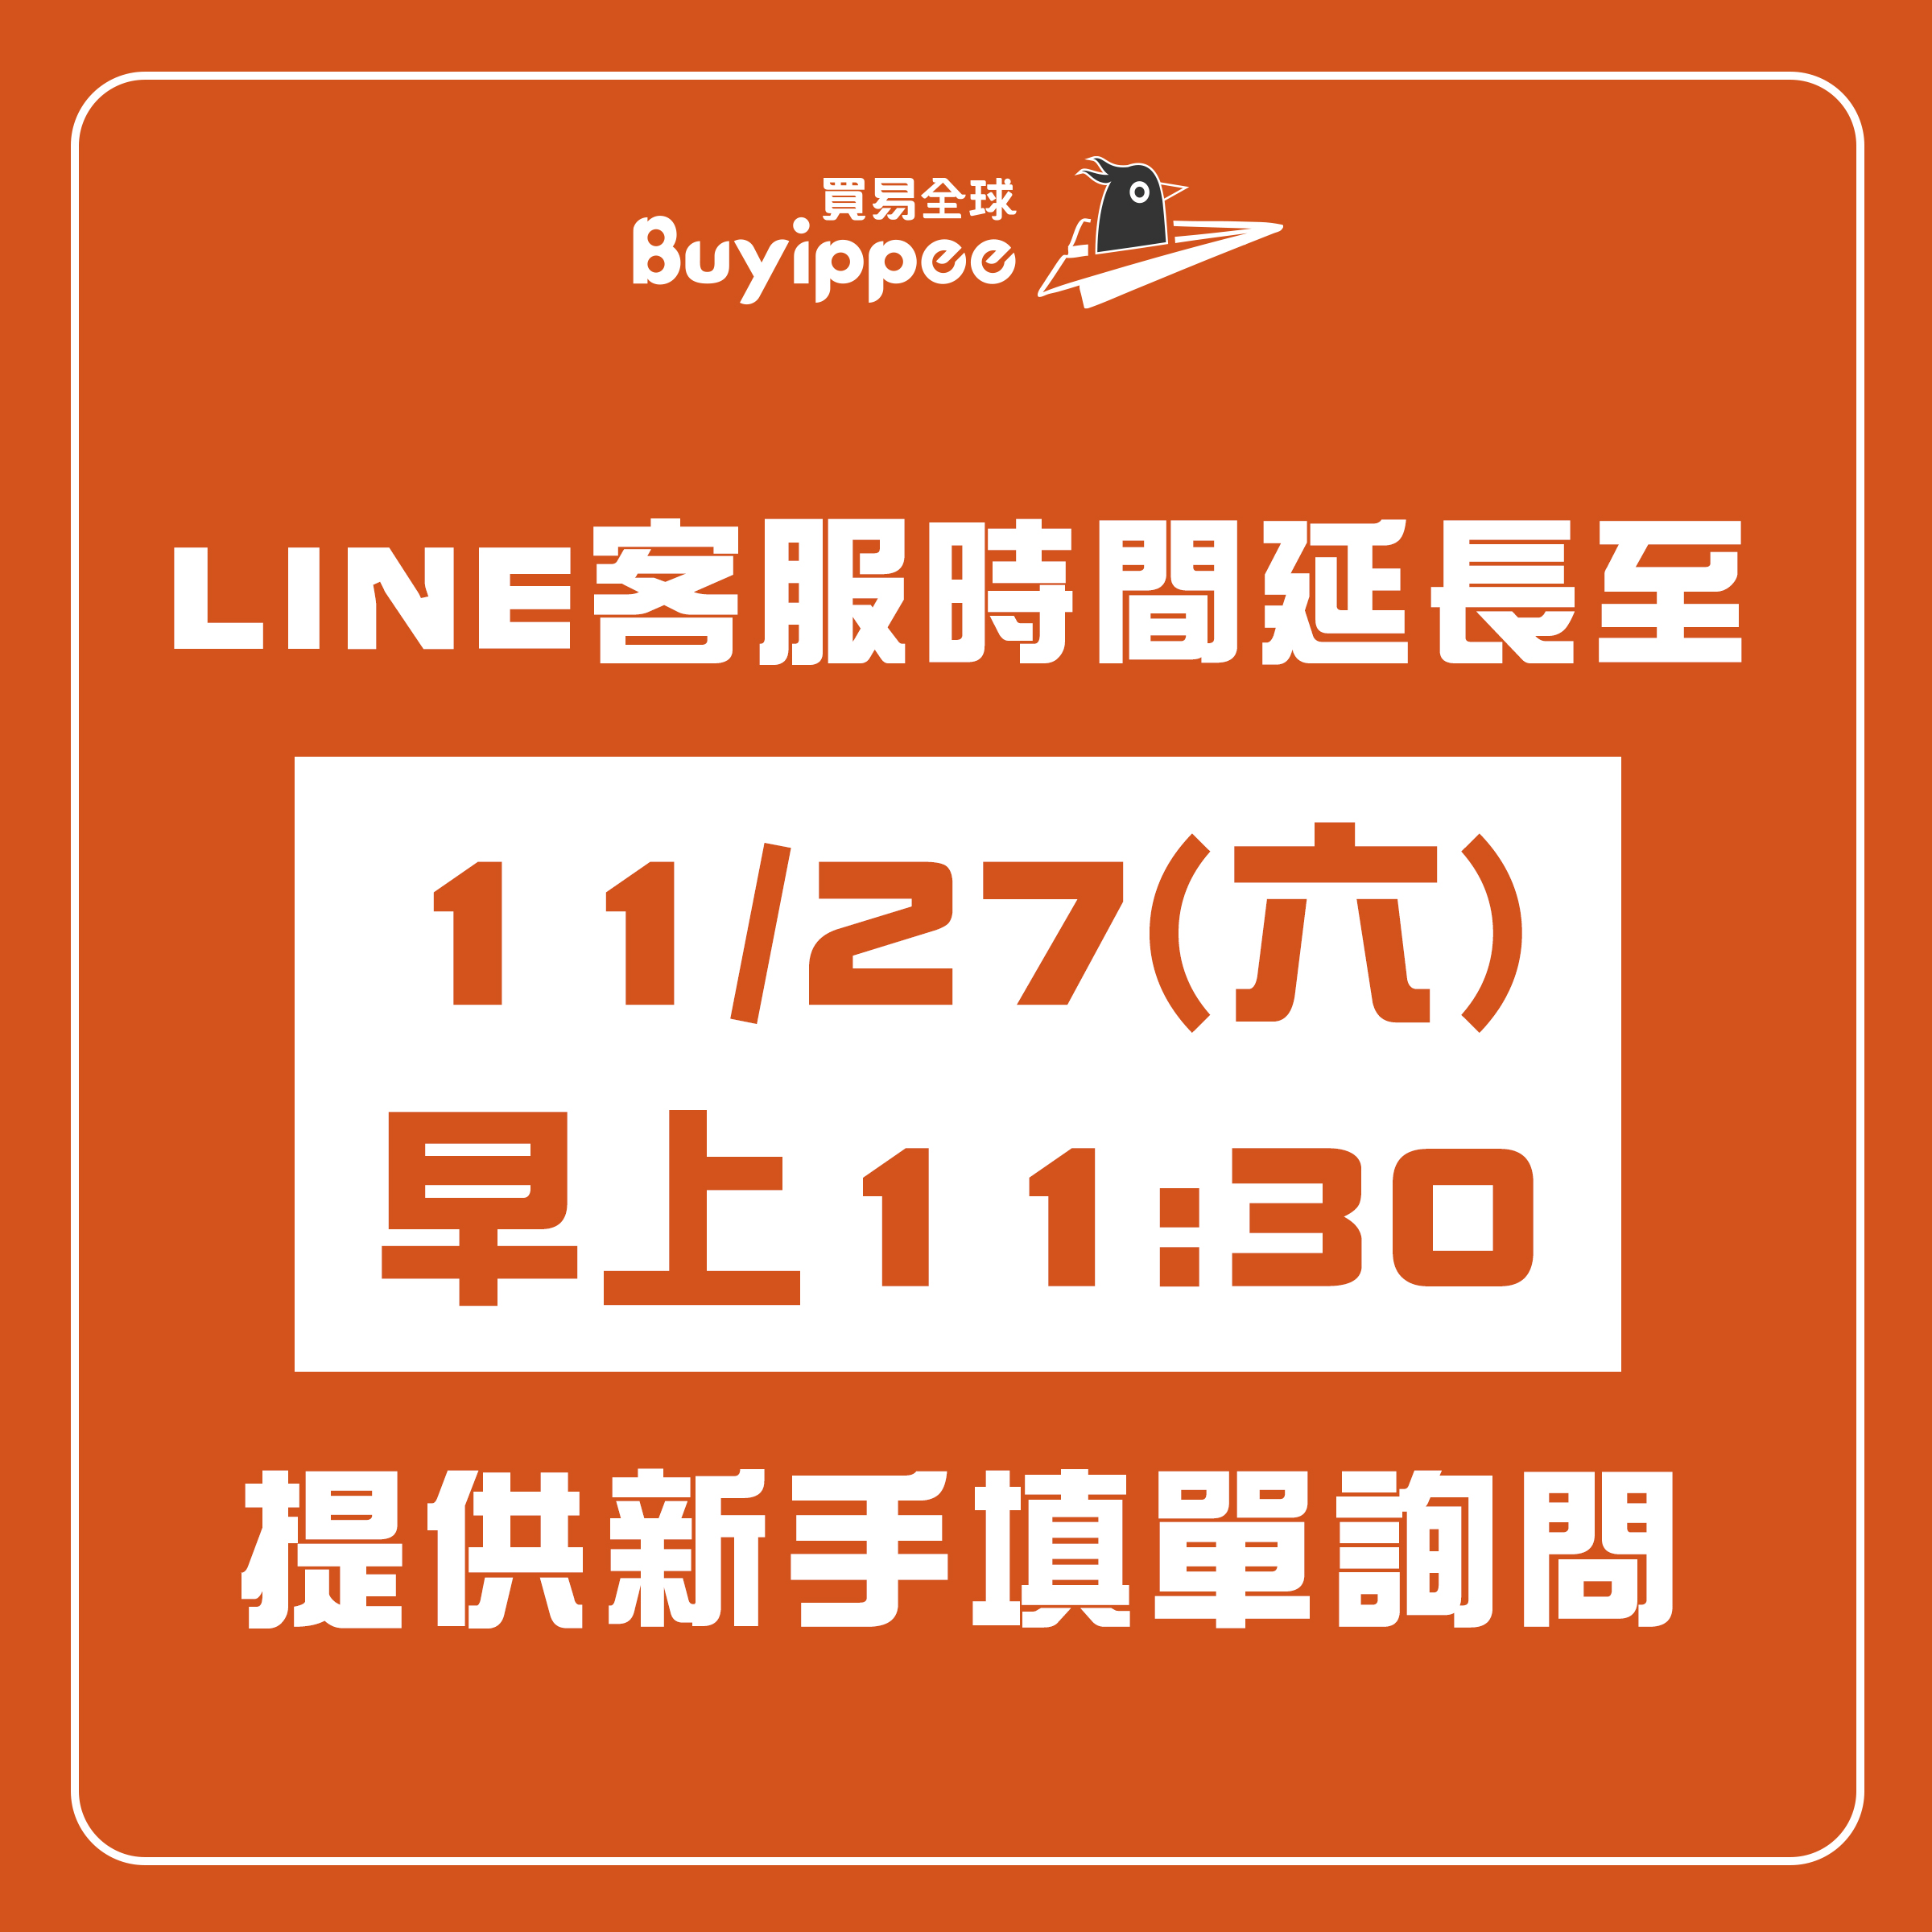 【buyipee公告】buyippee客服服務加開11/27(六)